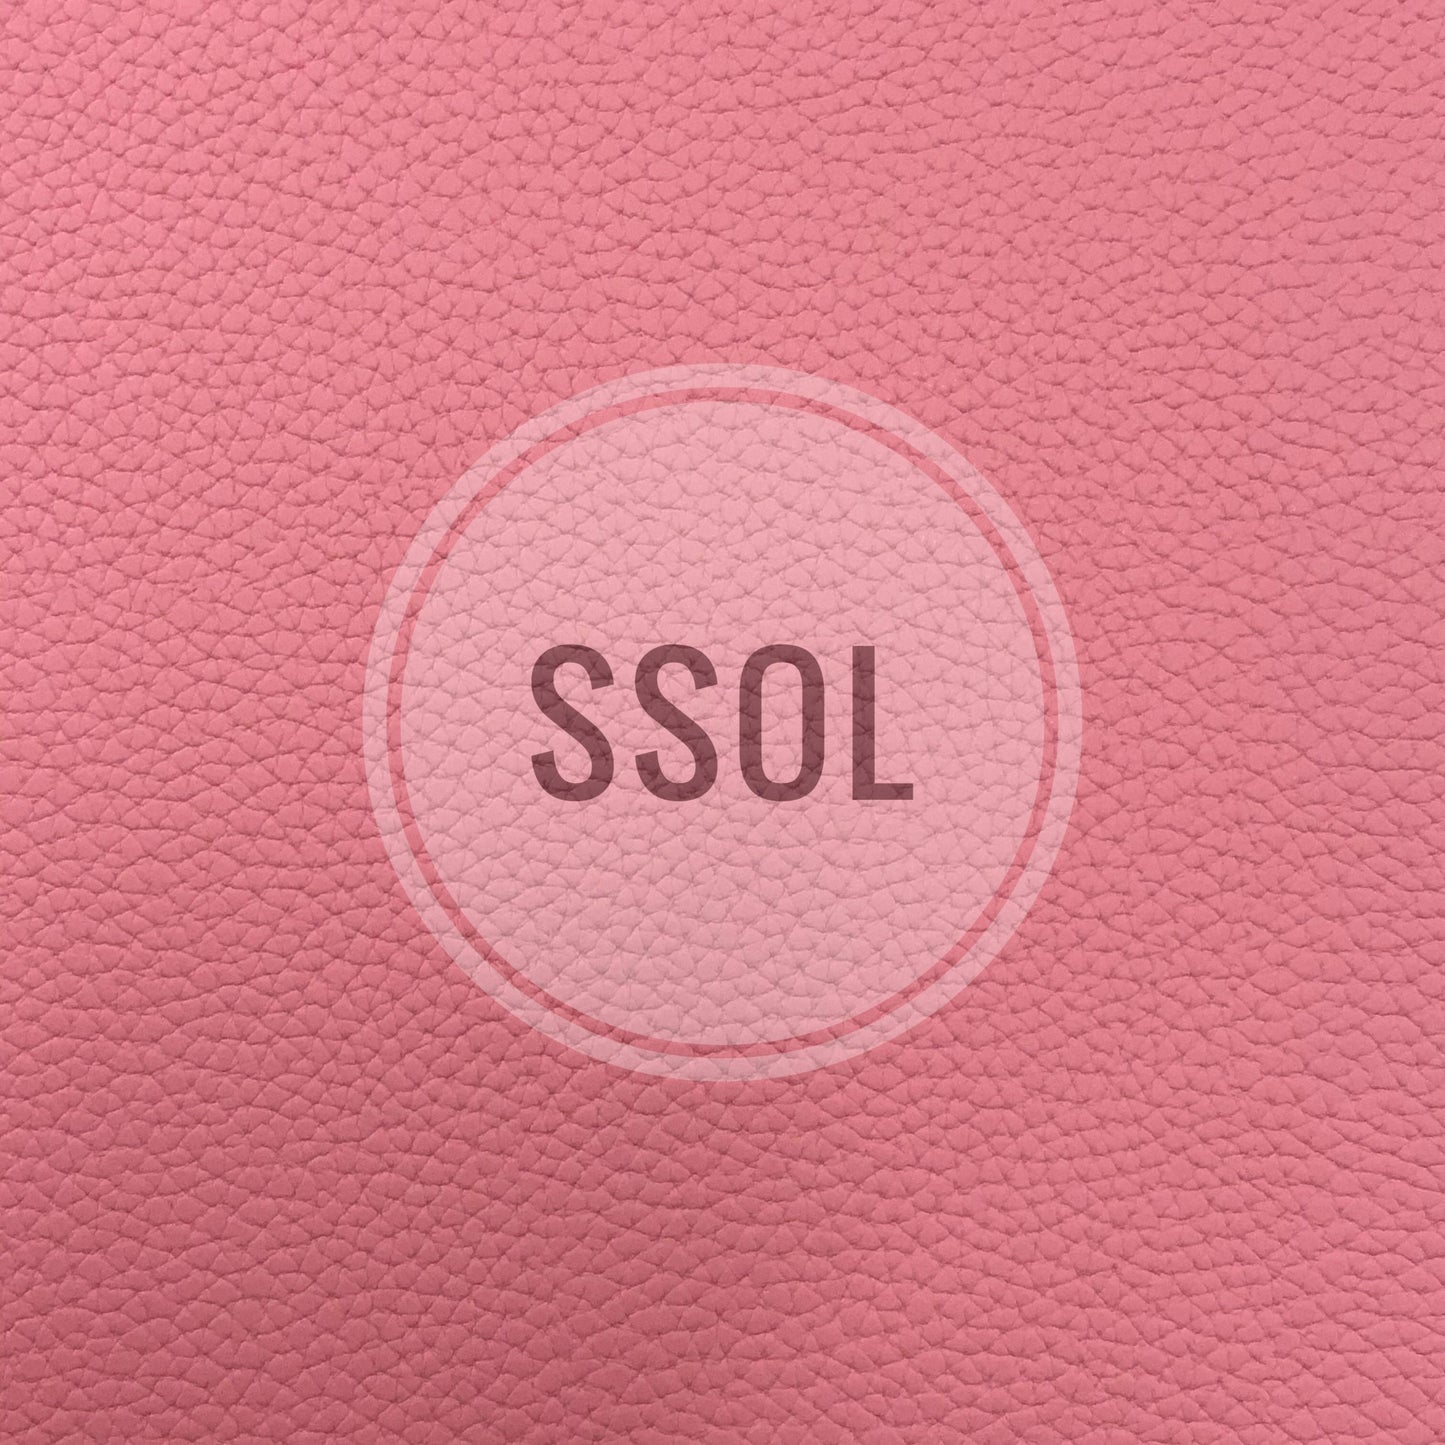 Vinyl/PU Leather - Plain Solids Textured 07 (Light Pink)